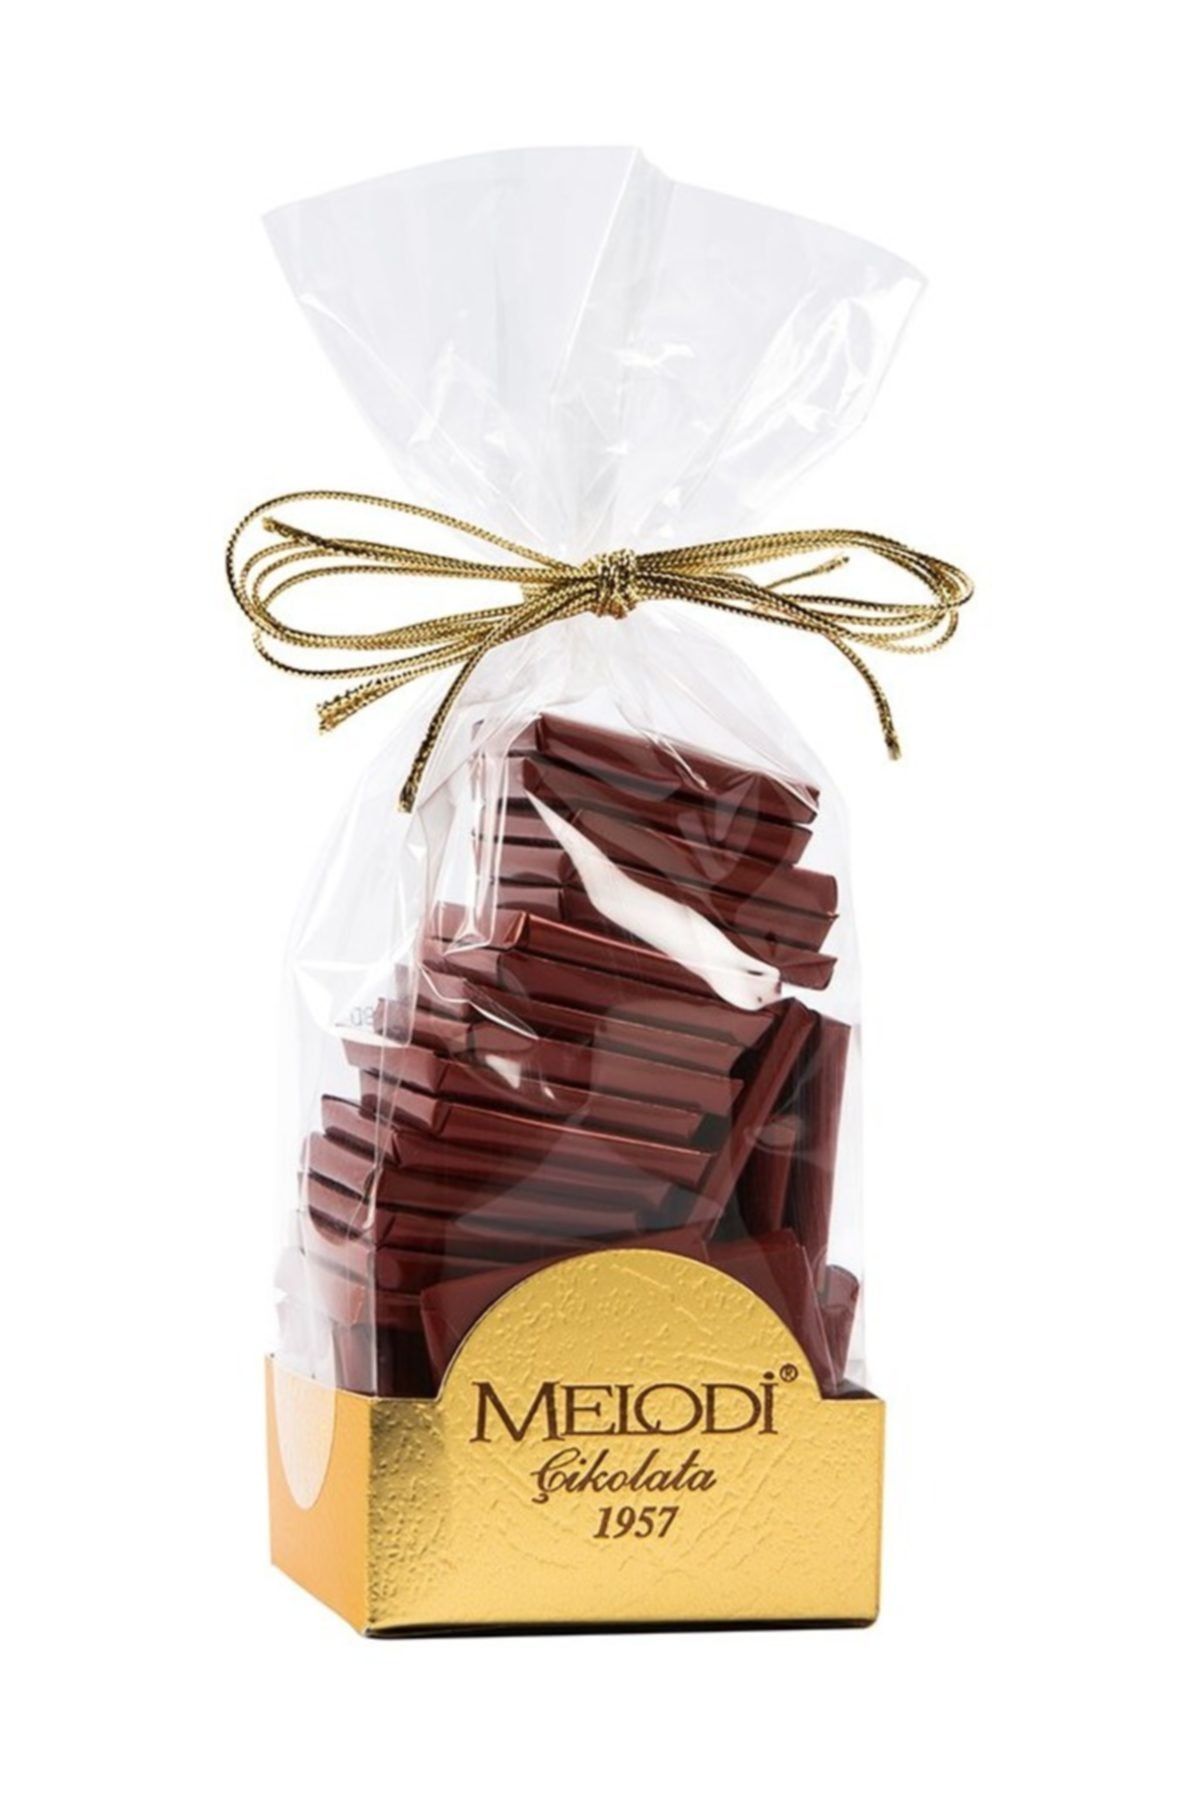 Melodi Çikolata Resital Madlen Sütlü Çikolata 150g Fiyatı, Yorumları